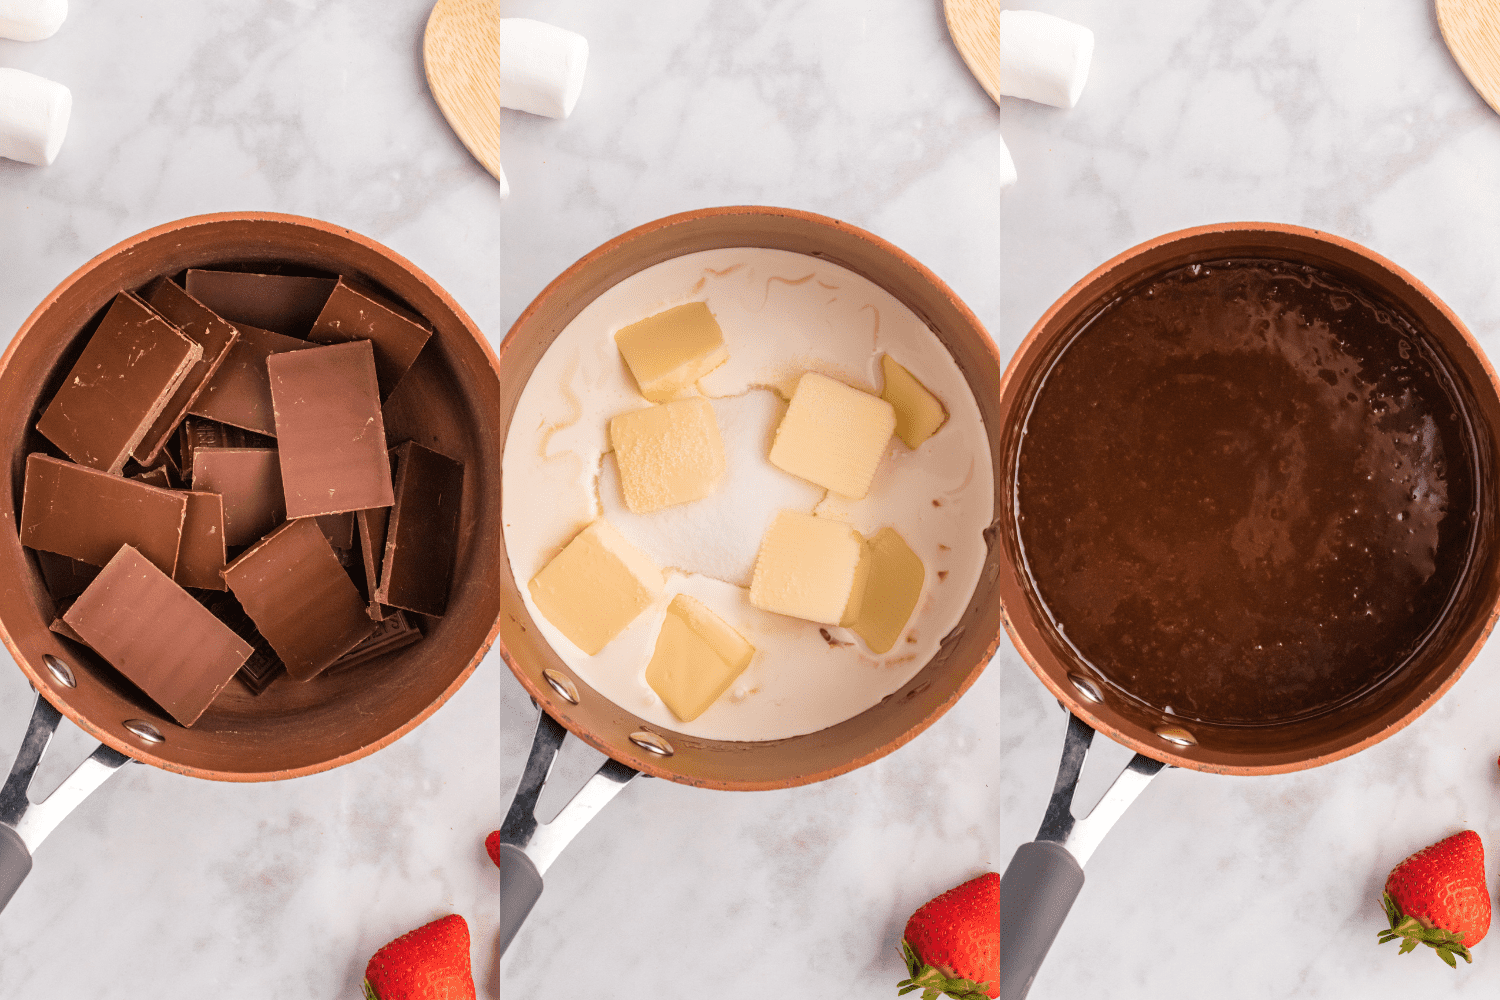 Process steps for making Chocolate Fondue